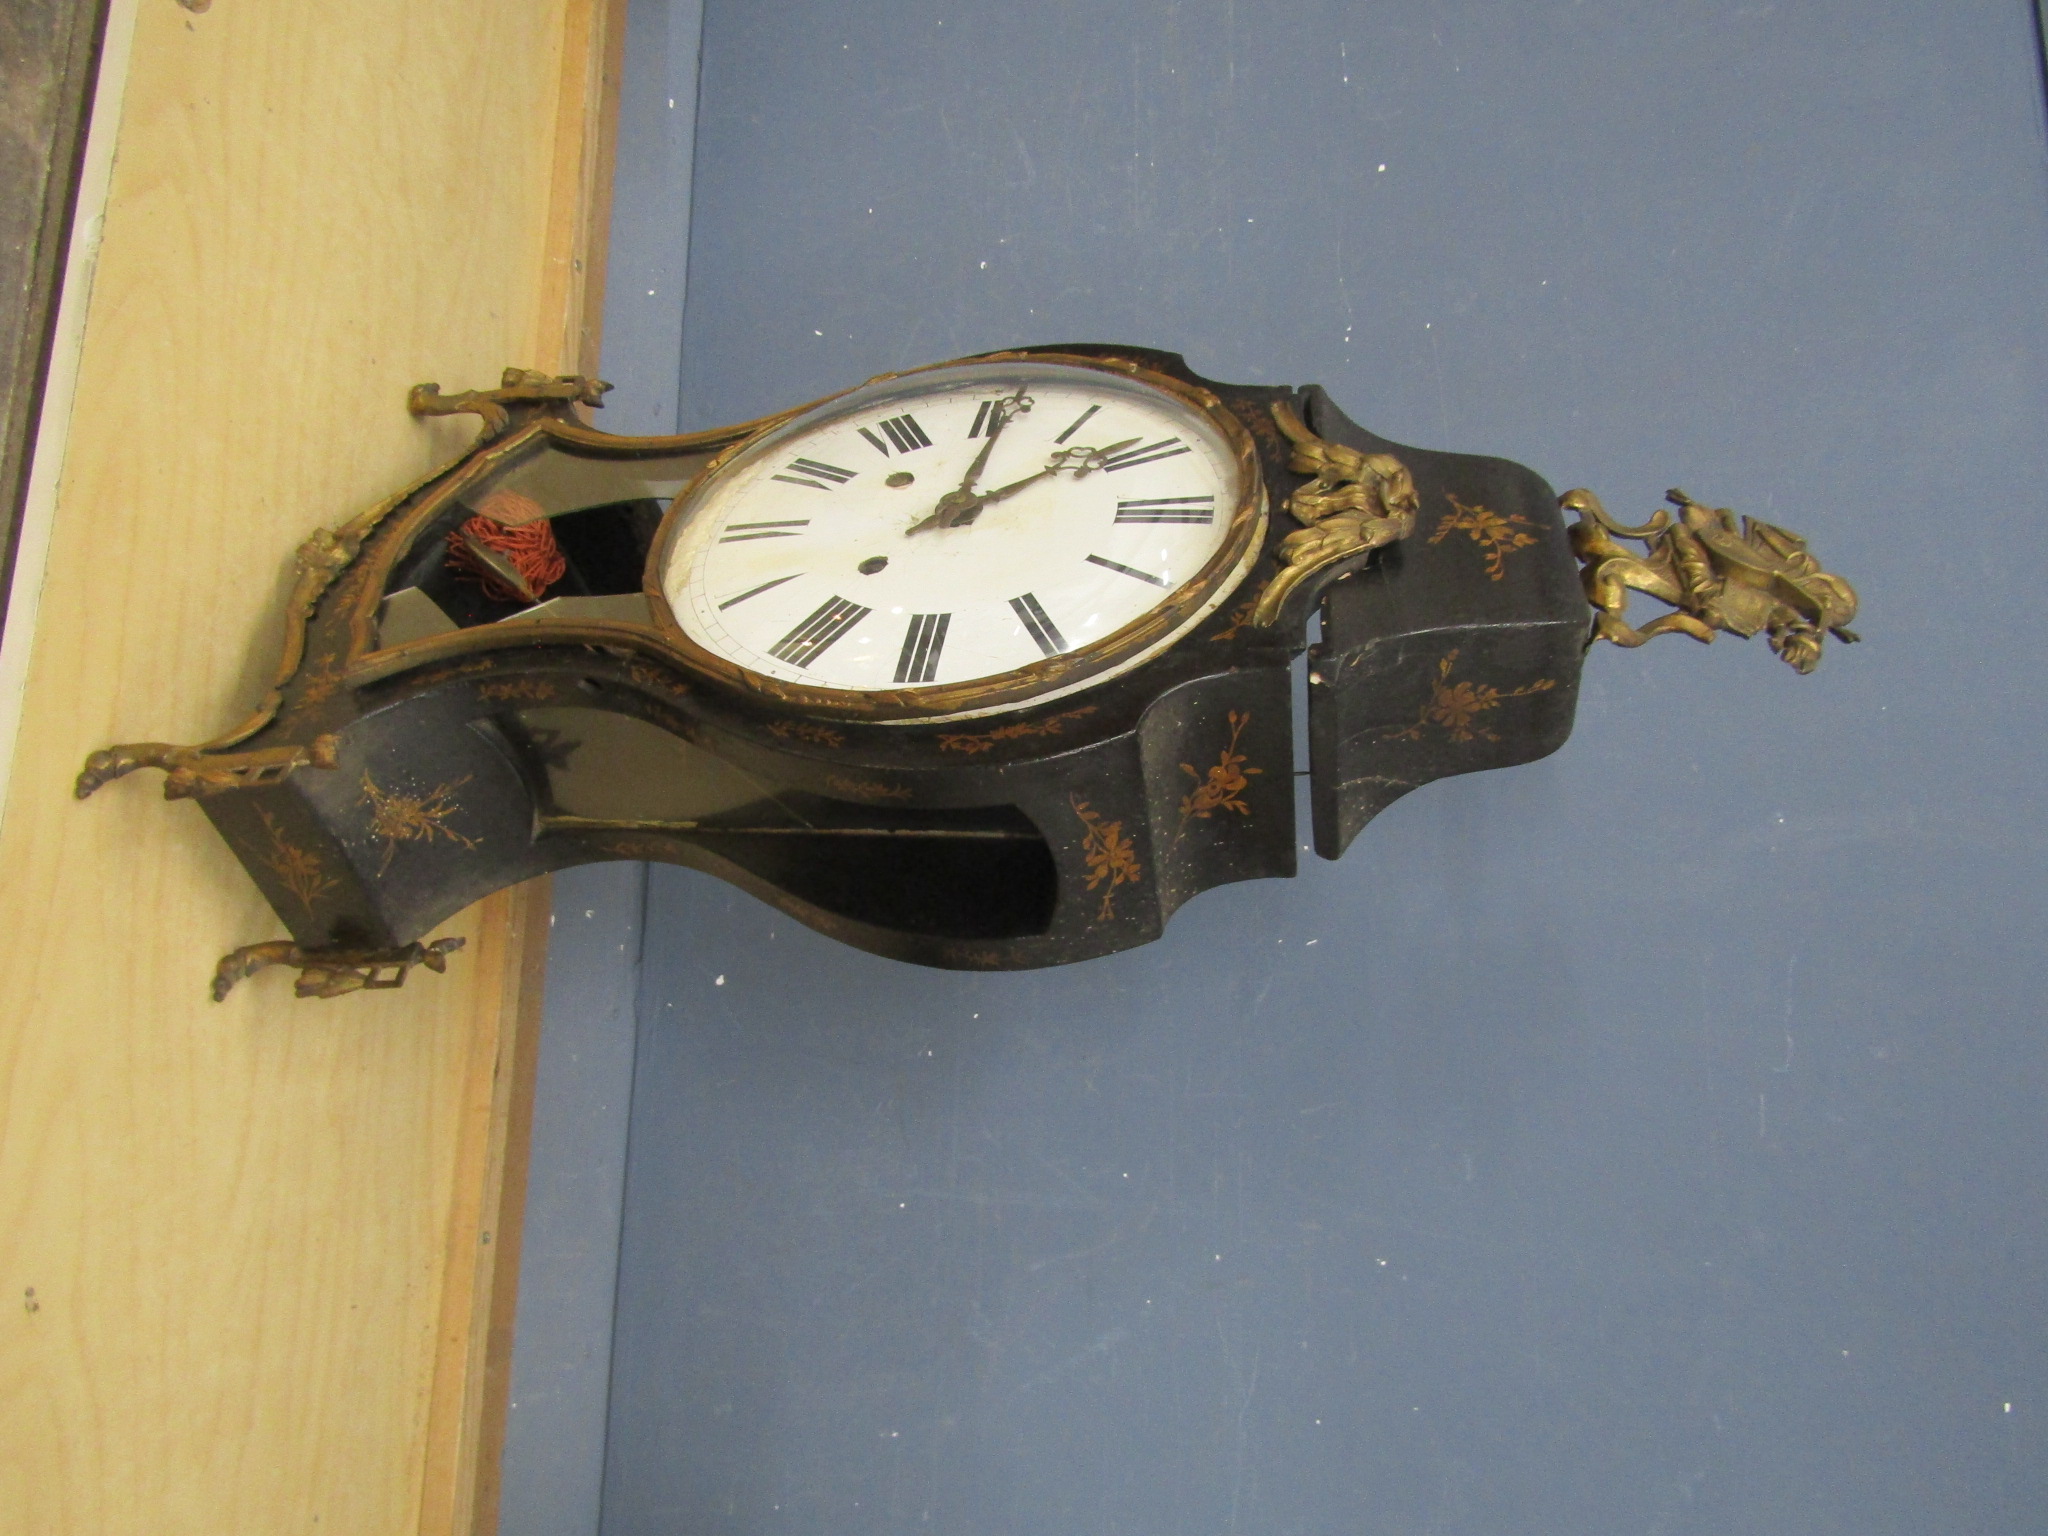 19th Century Swiss style striking bracket clock with Ormolu decoration, pendulum and key (needs some - Image 8 of 10